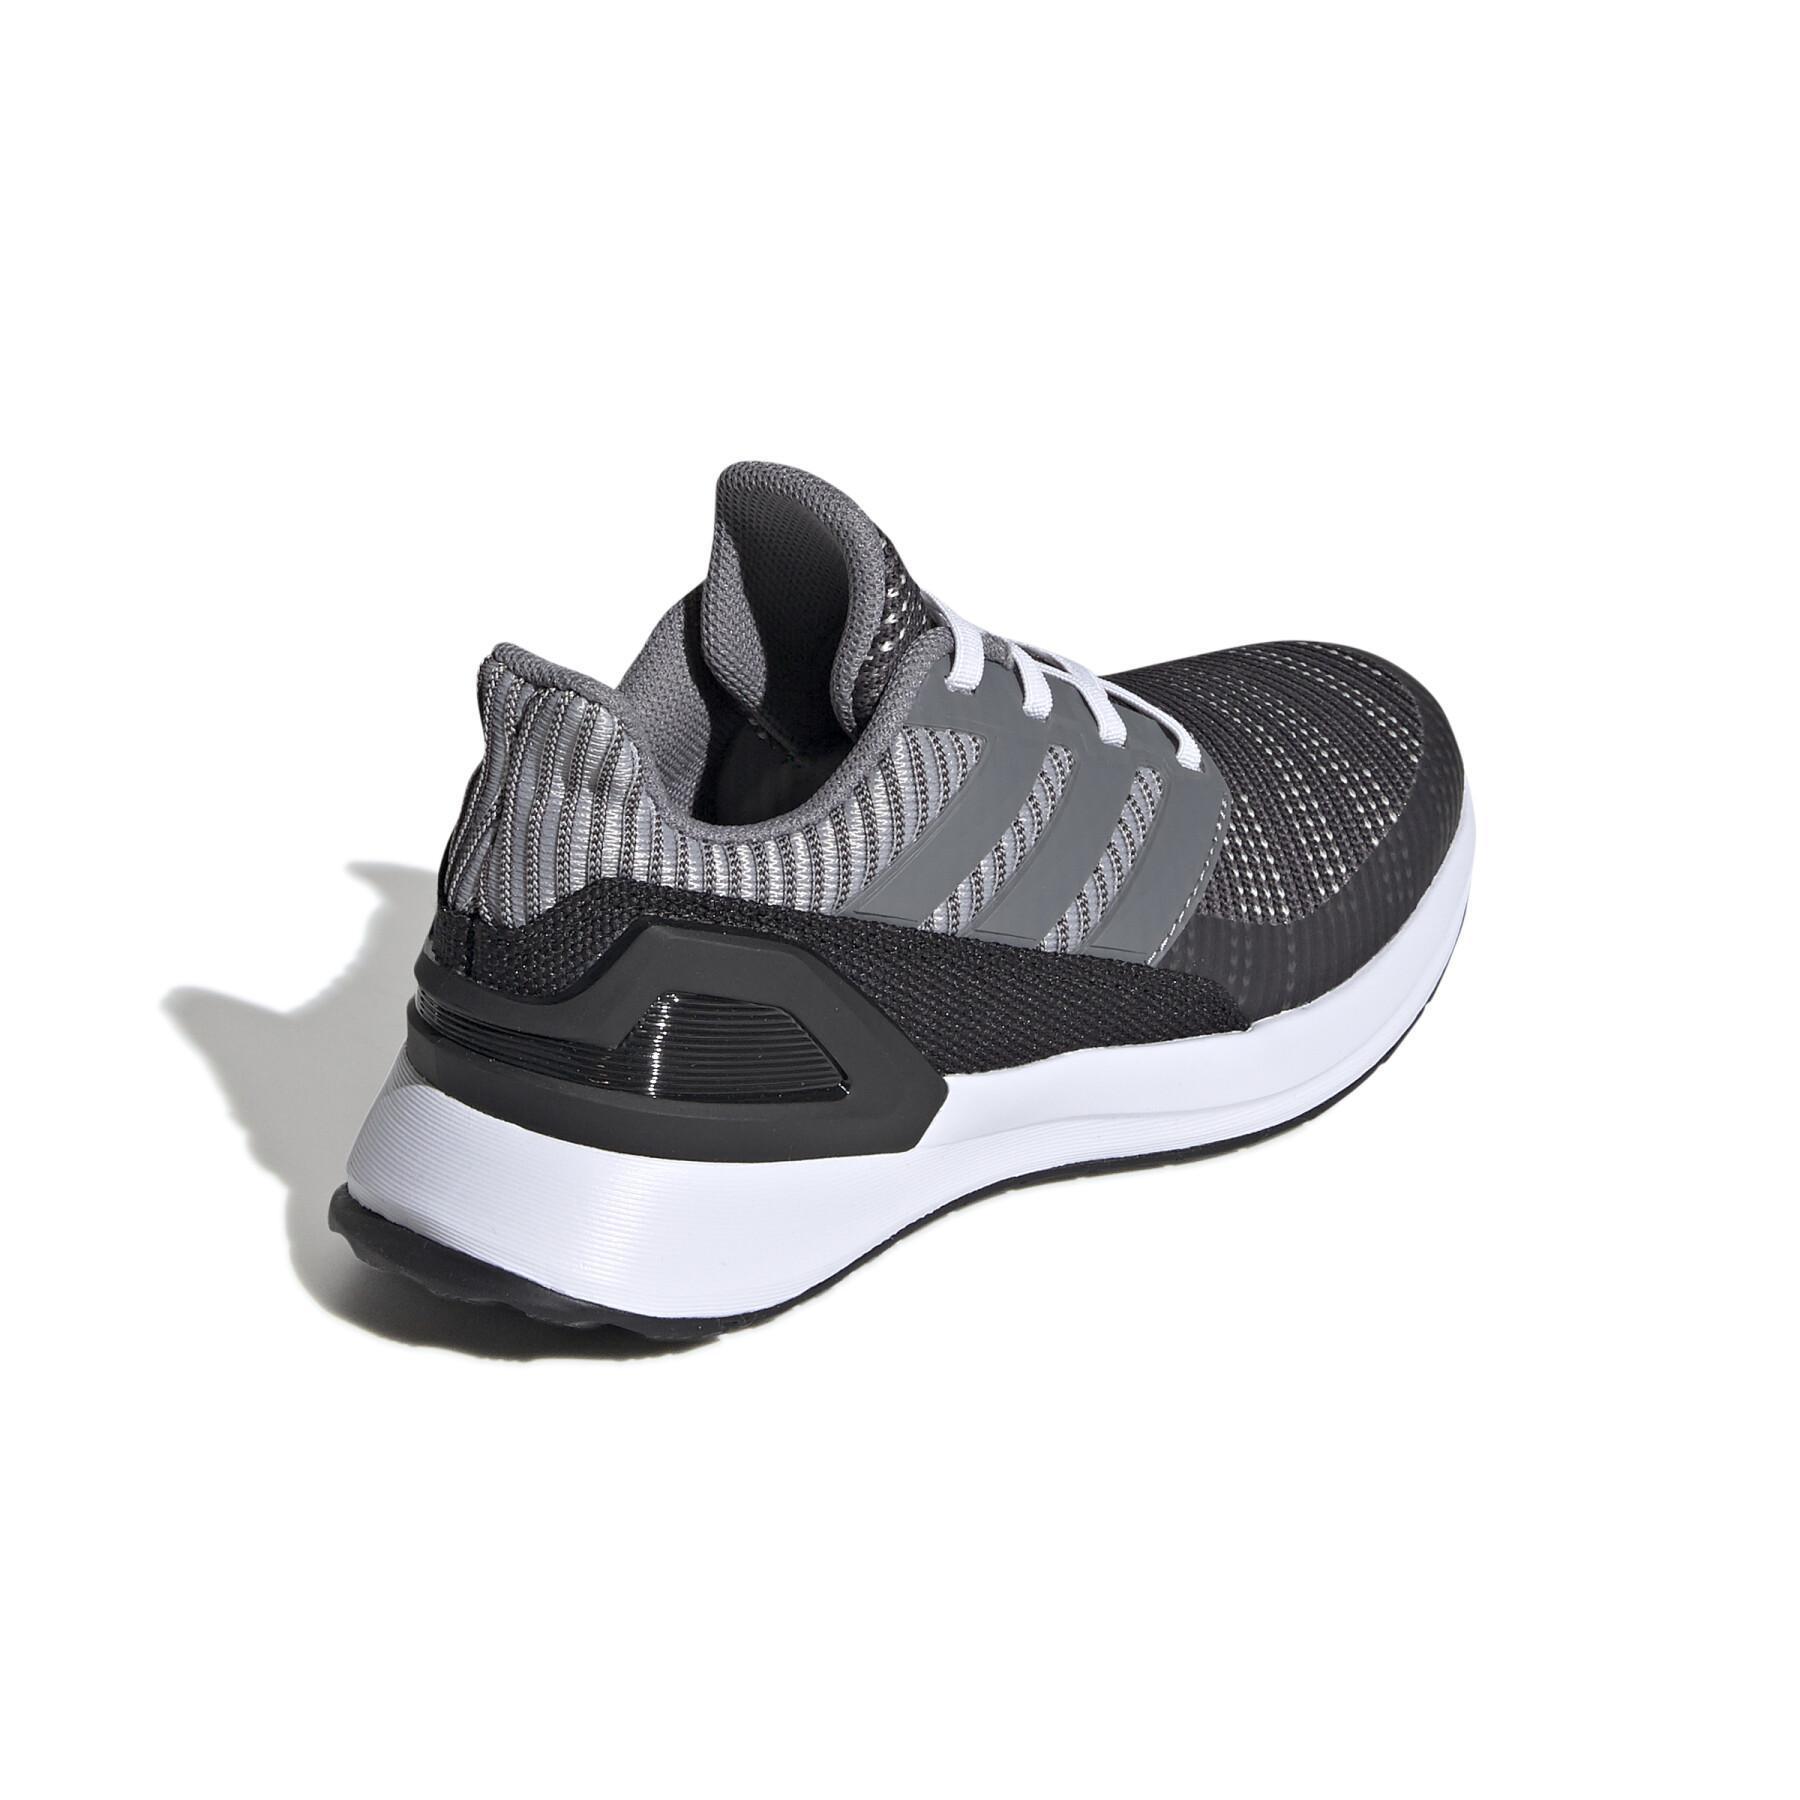 Chaussures de running kid adidas RapidaRun